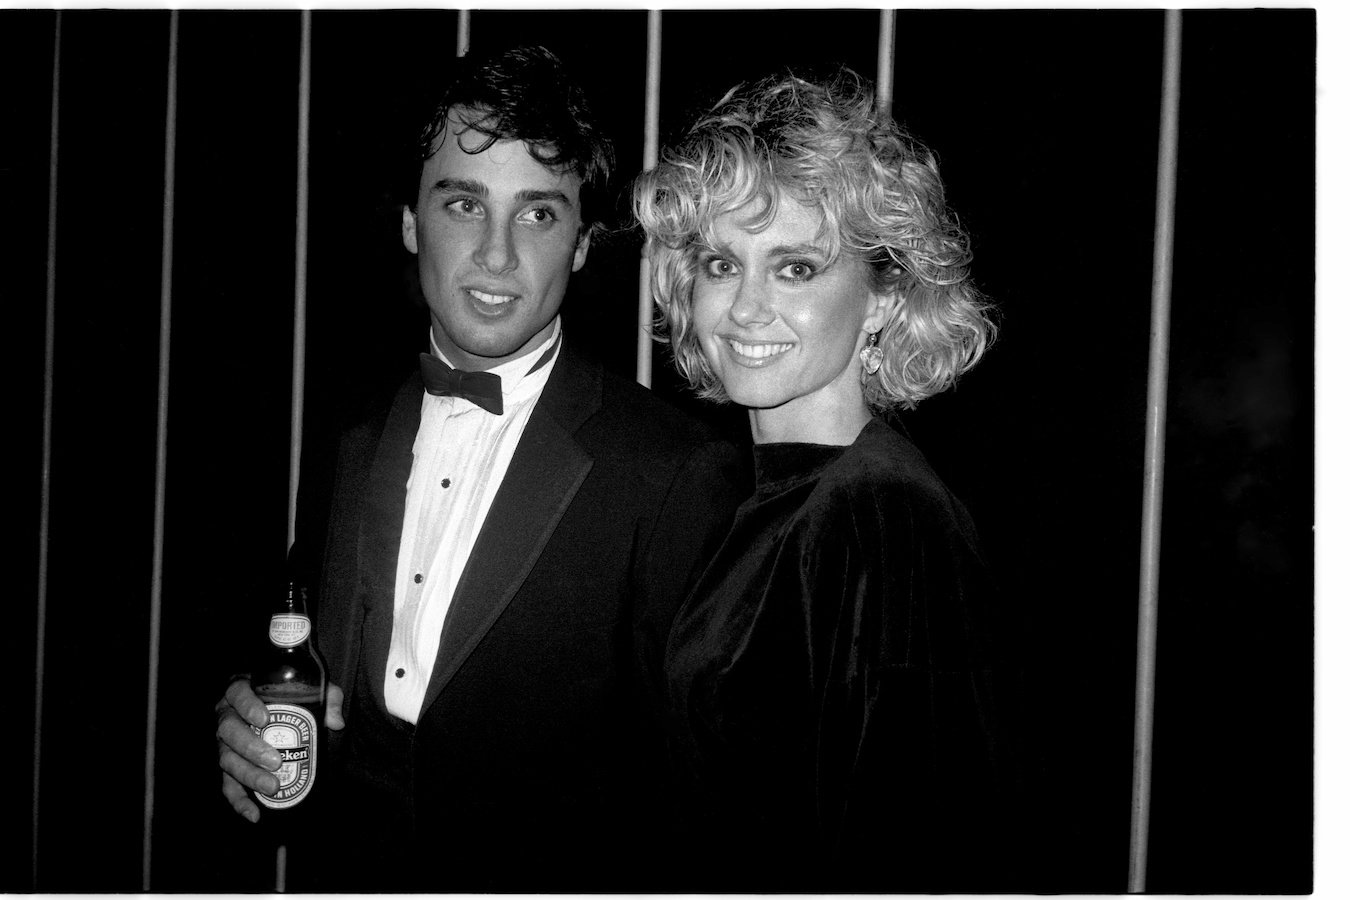 A black and white photo of Olivia Newton-John smiling with her husband Matt Lattanzi